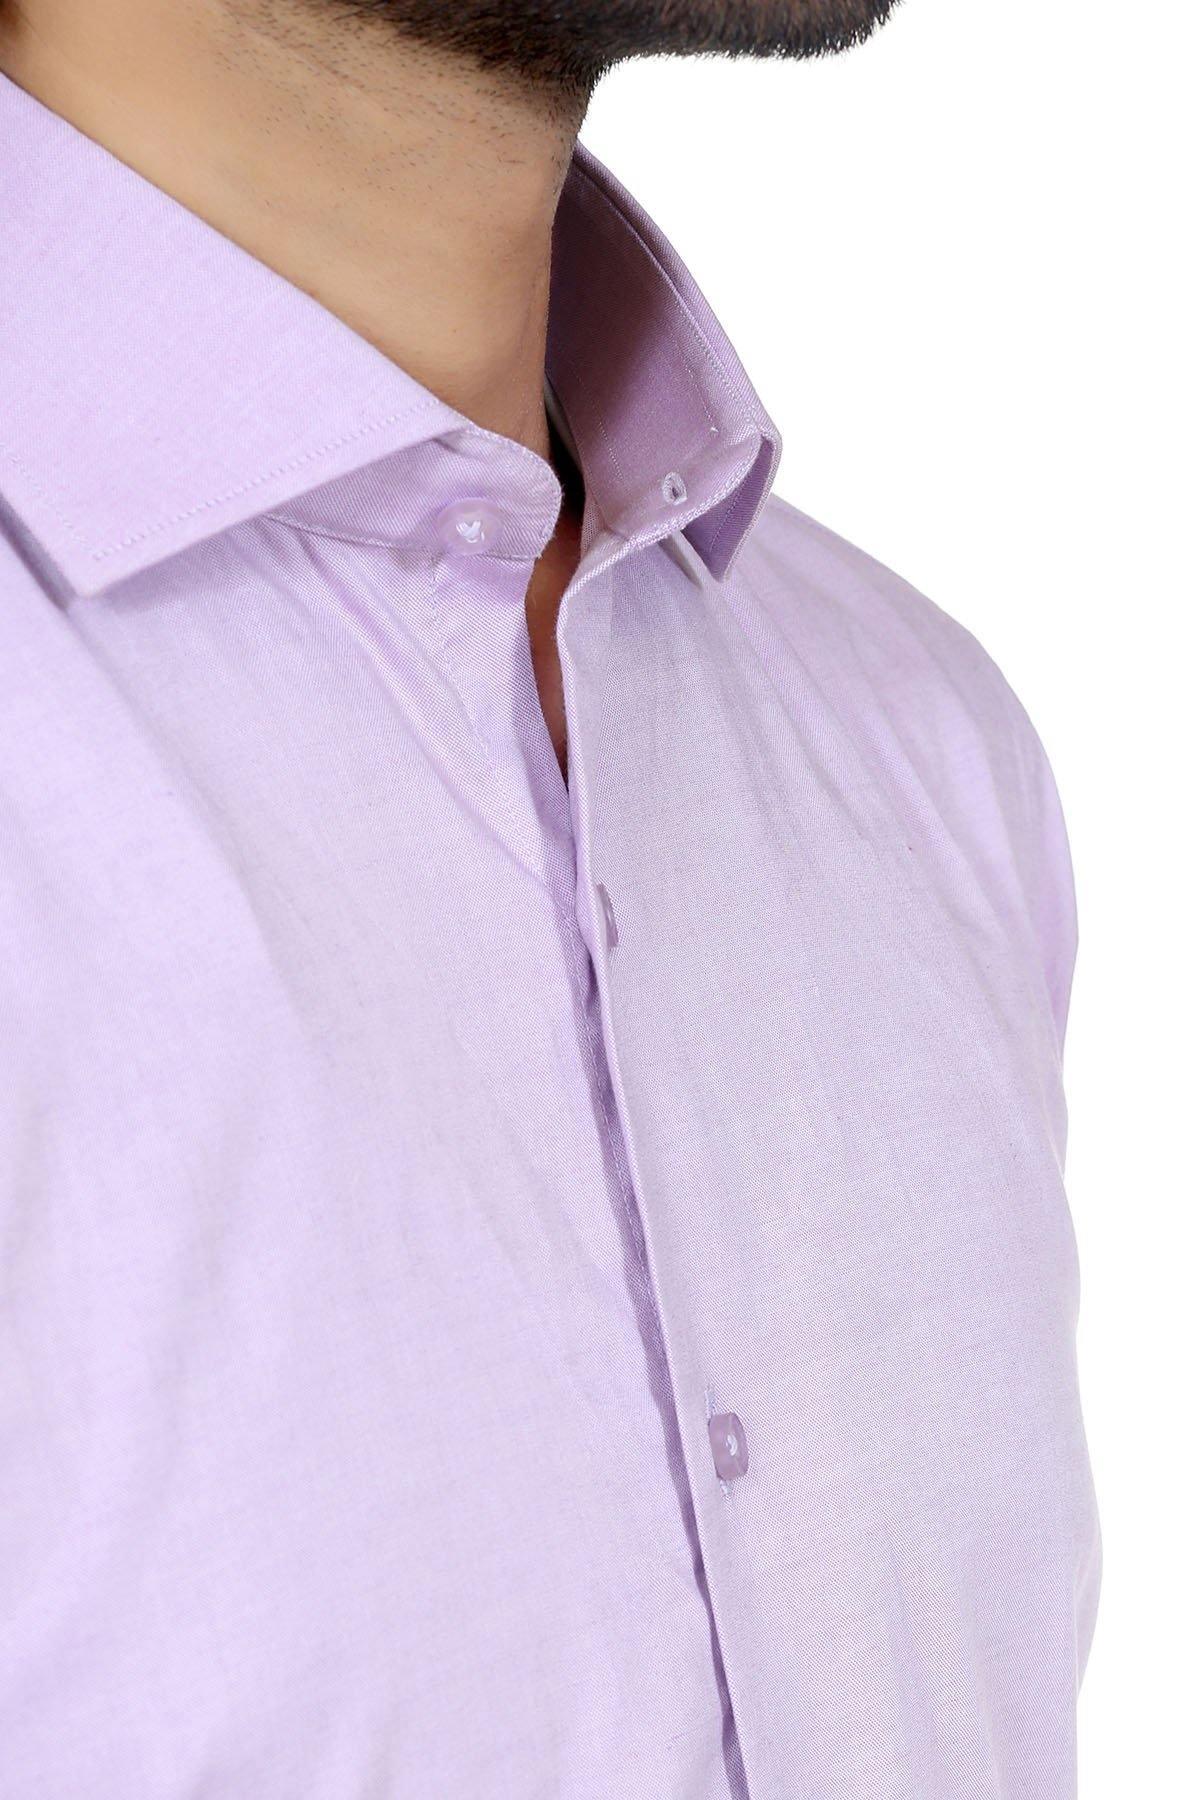 Dress Shirt Mauve Color at Charcoal Clothing